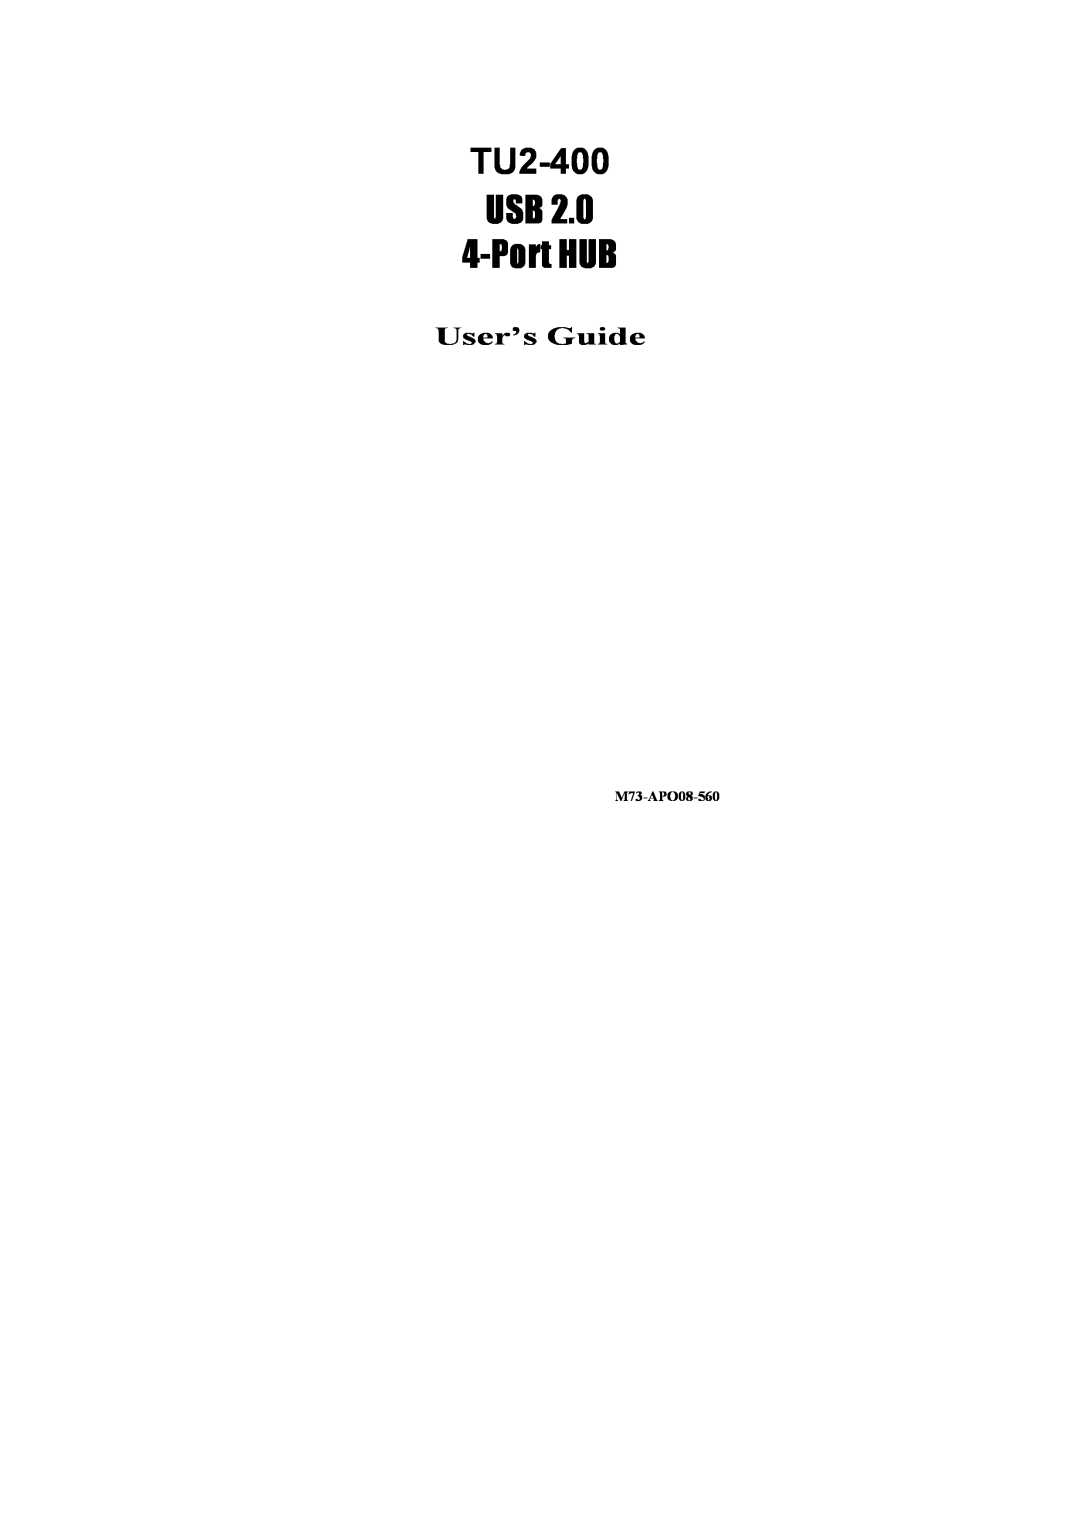 PC Concepts TU2-400 manual USB 4-Port HUB, User’s Guide, M73-APO08-560 